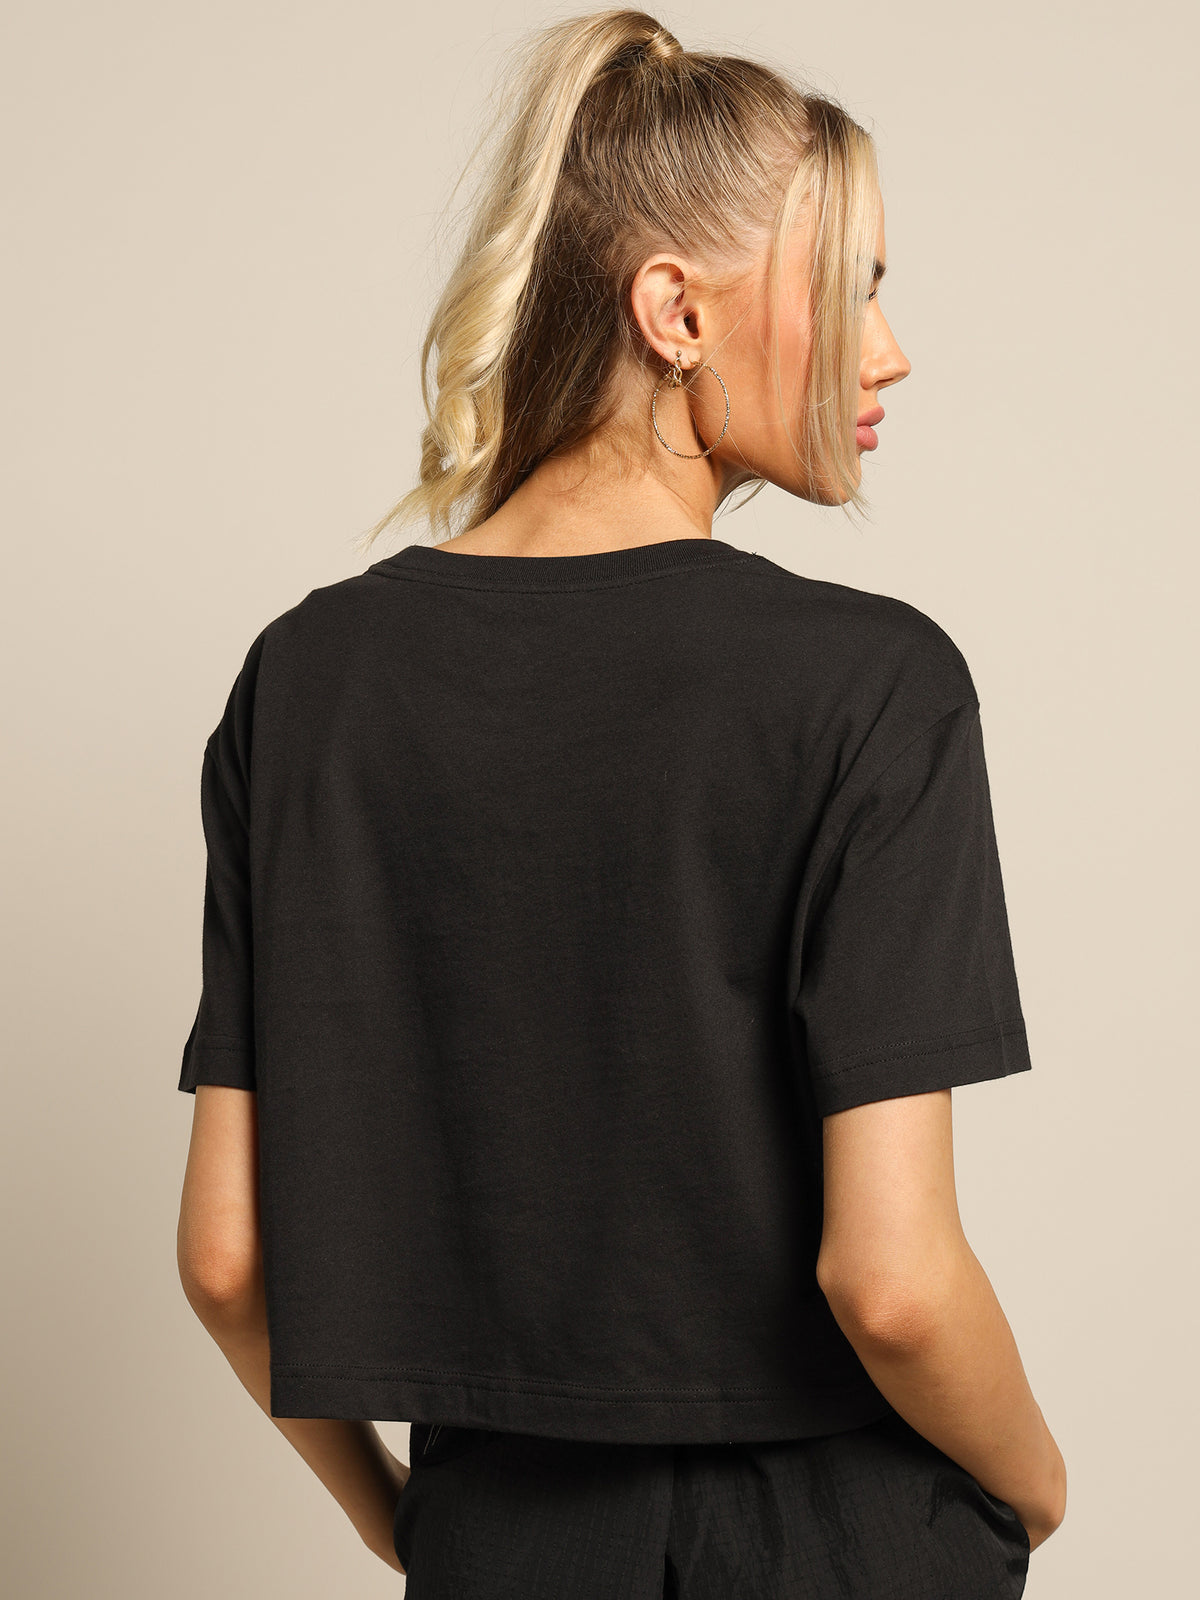 NSW Short Sleeve Crop T-Shirt in Black